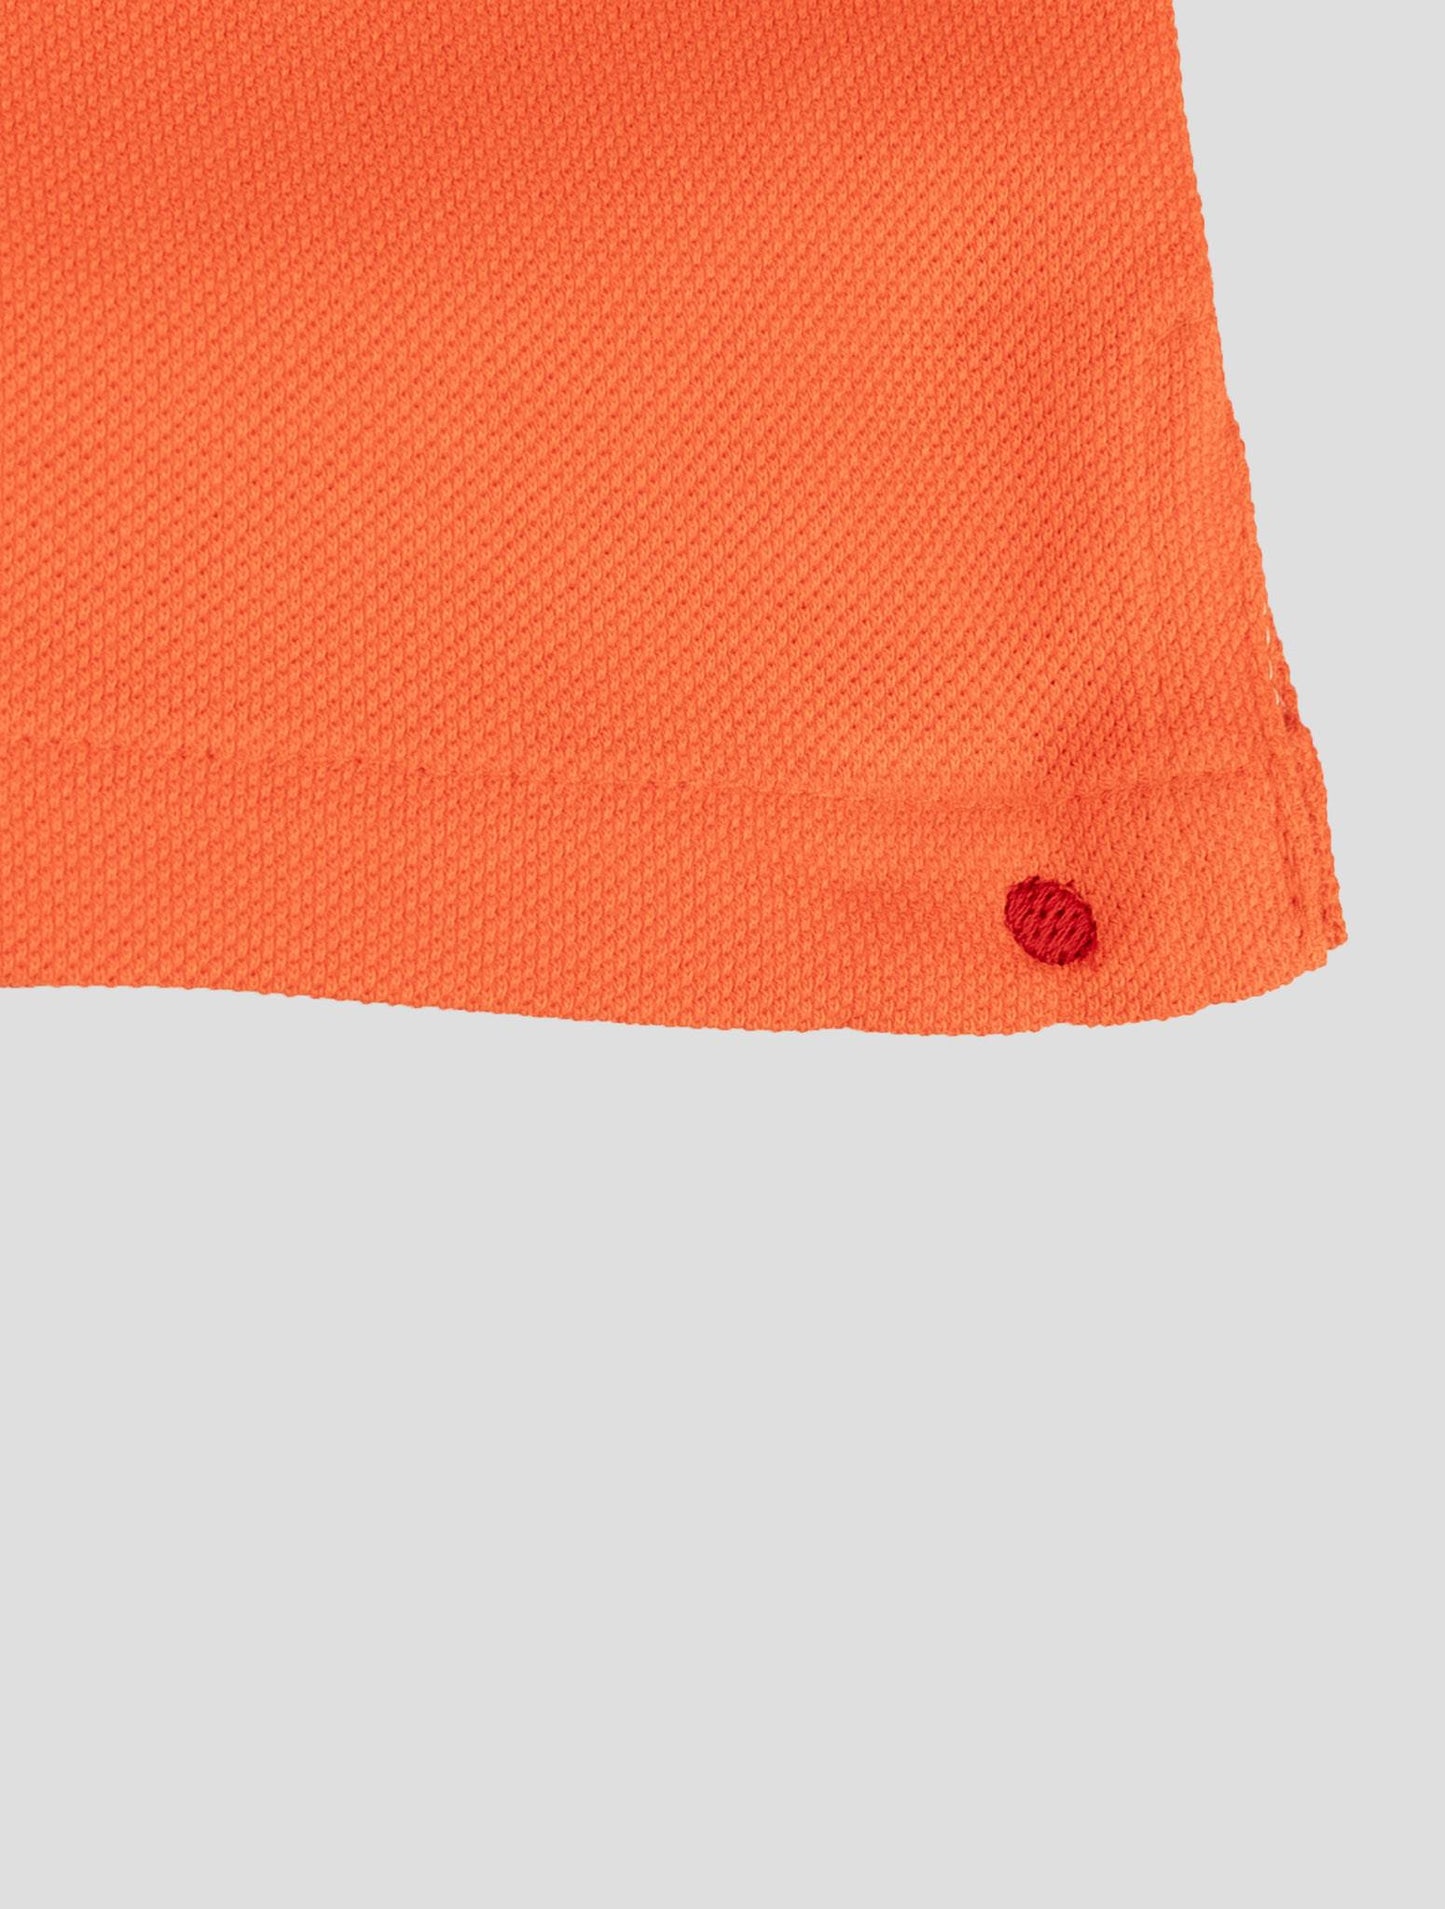 Pantalones cortos de algodón naranjas de Kiton